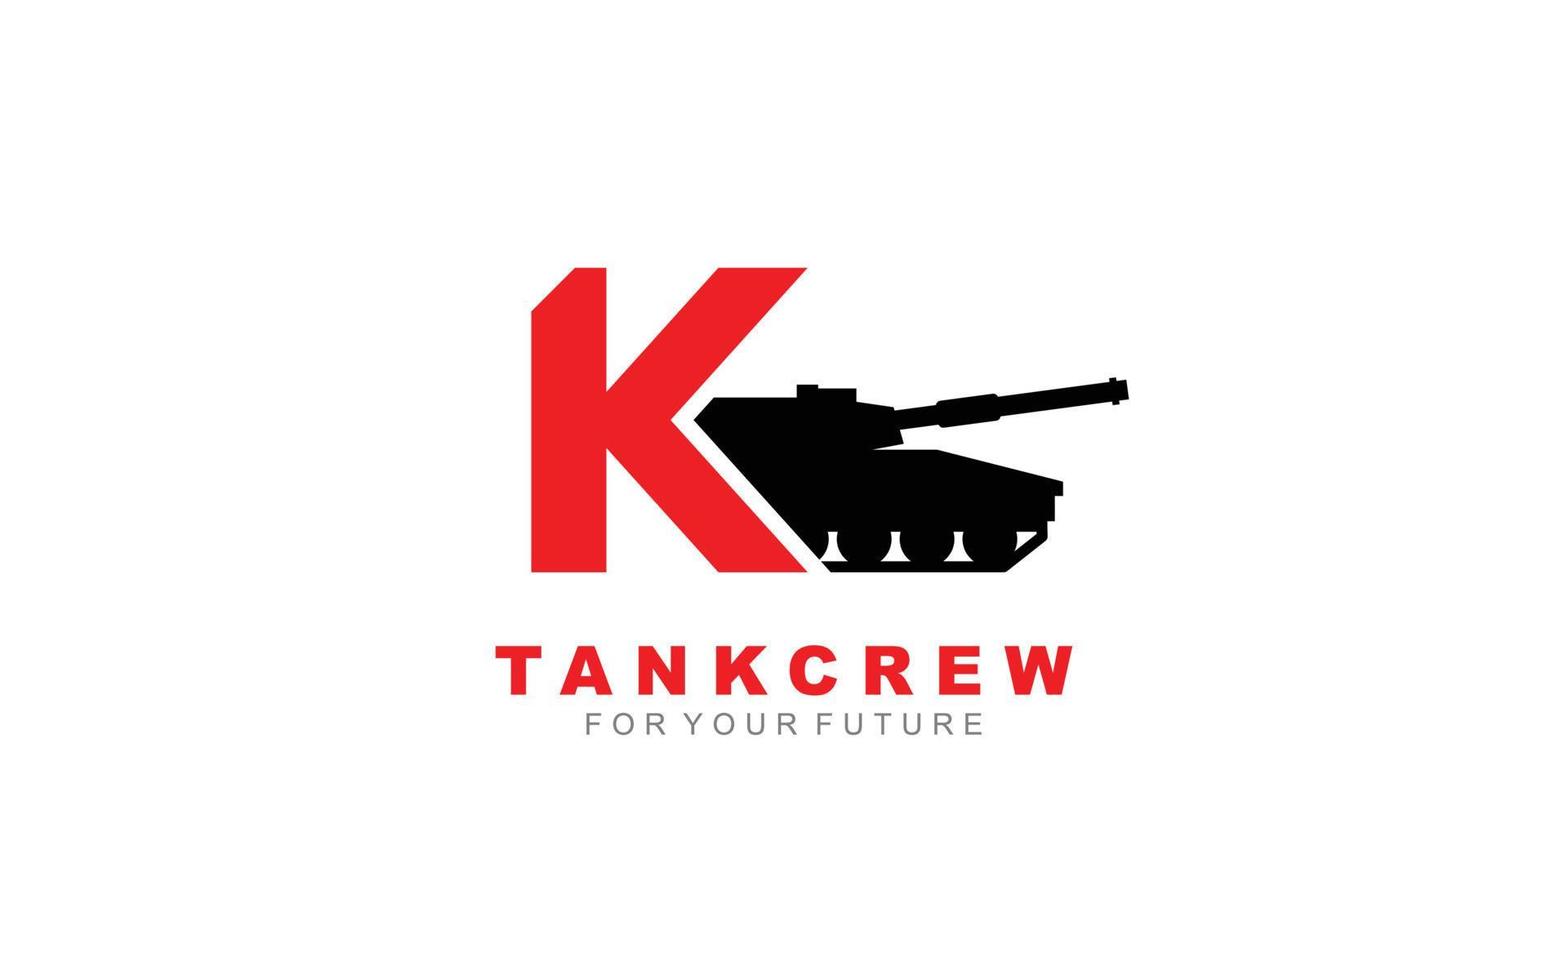 K logo tank for identity. letter template vector illustration for your brand.